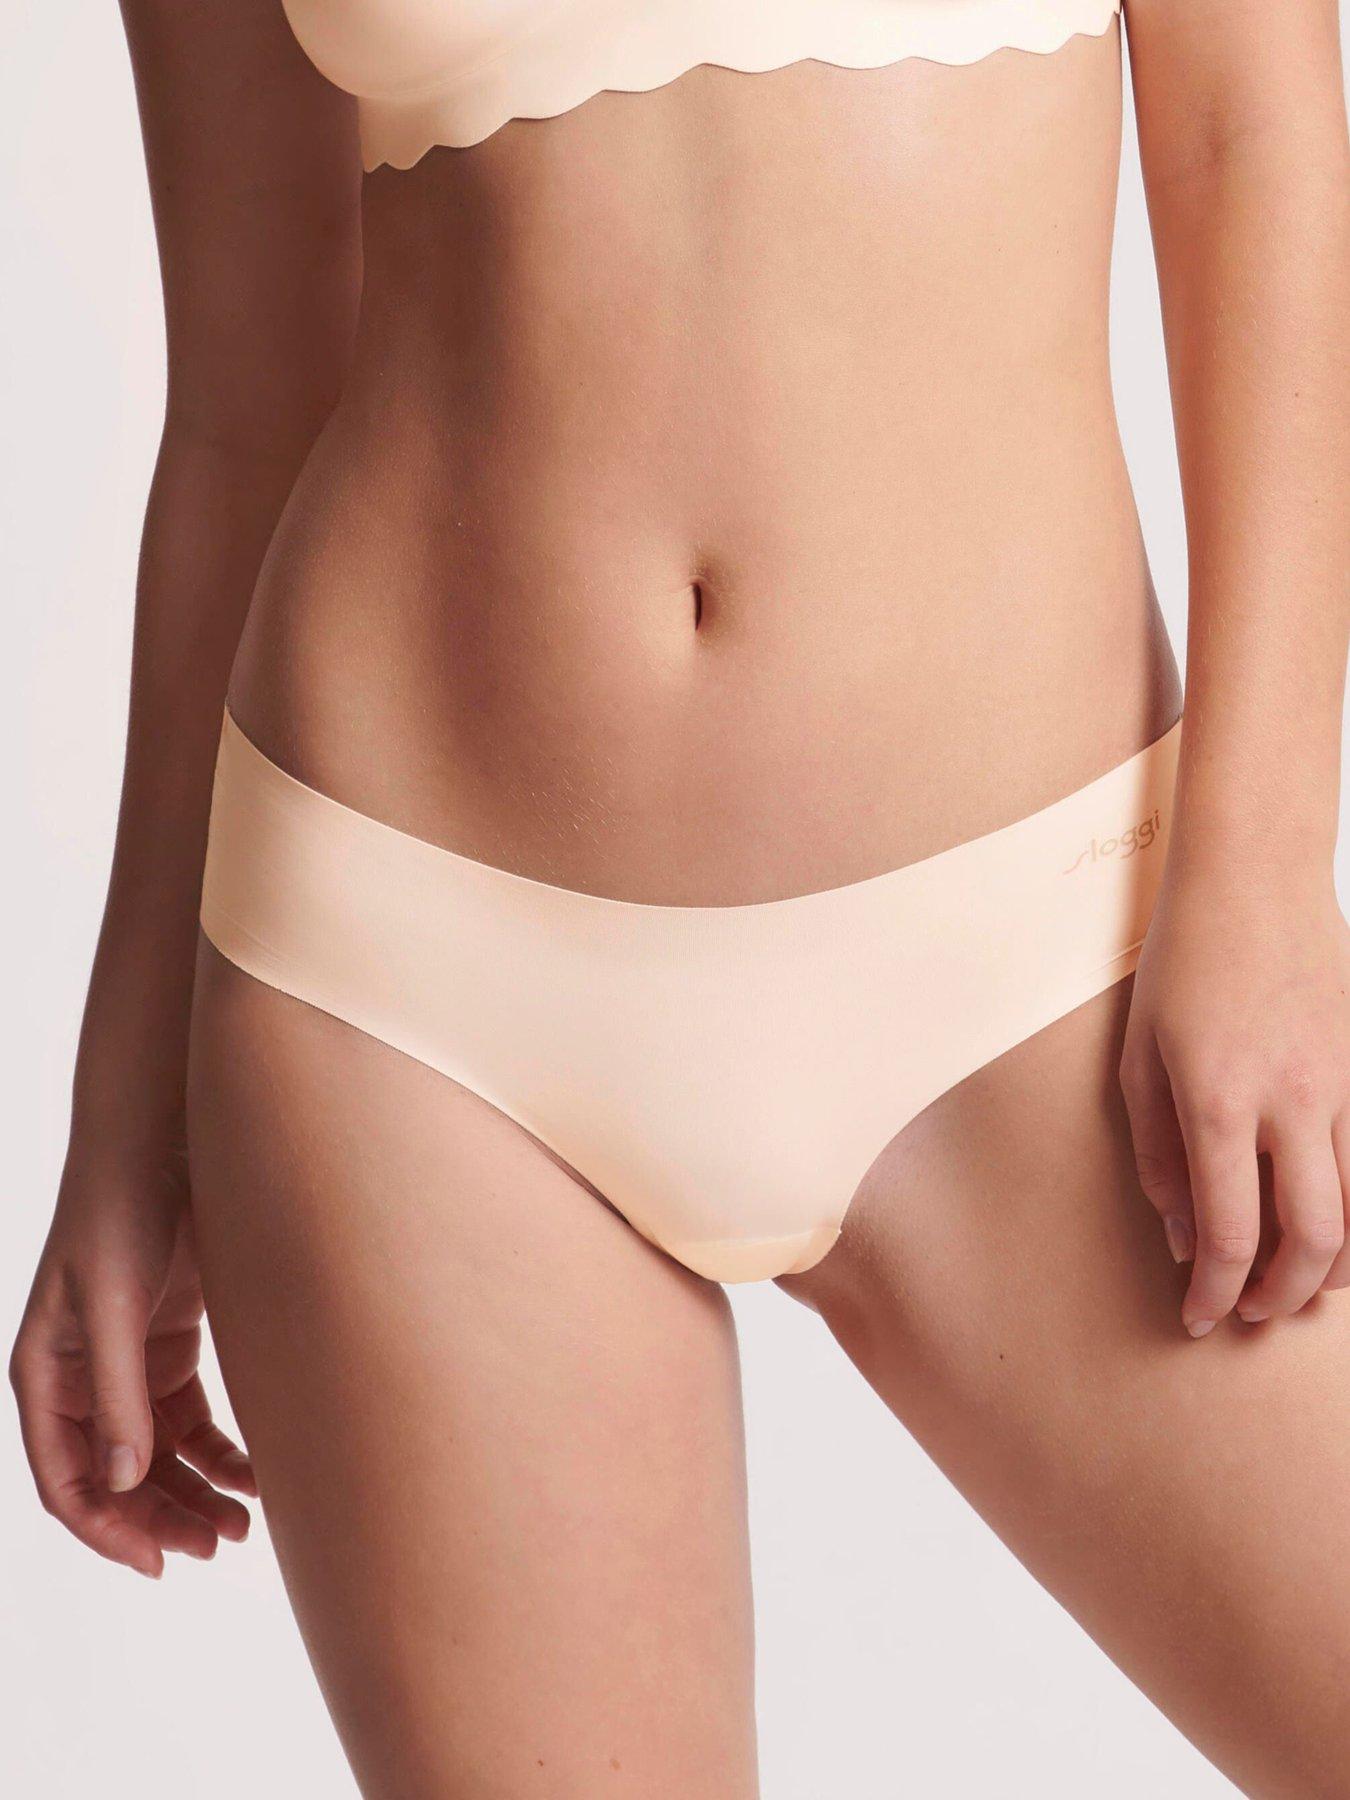 F&F - Our new comfort underwear is super-soft with zero underwire